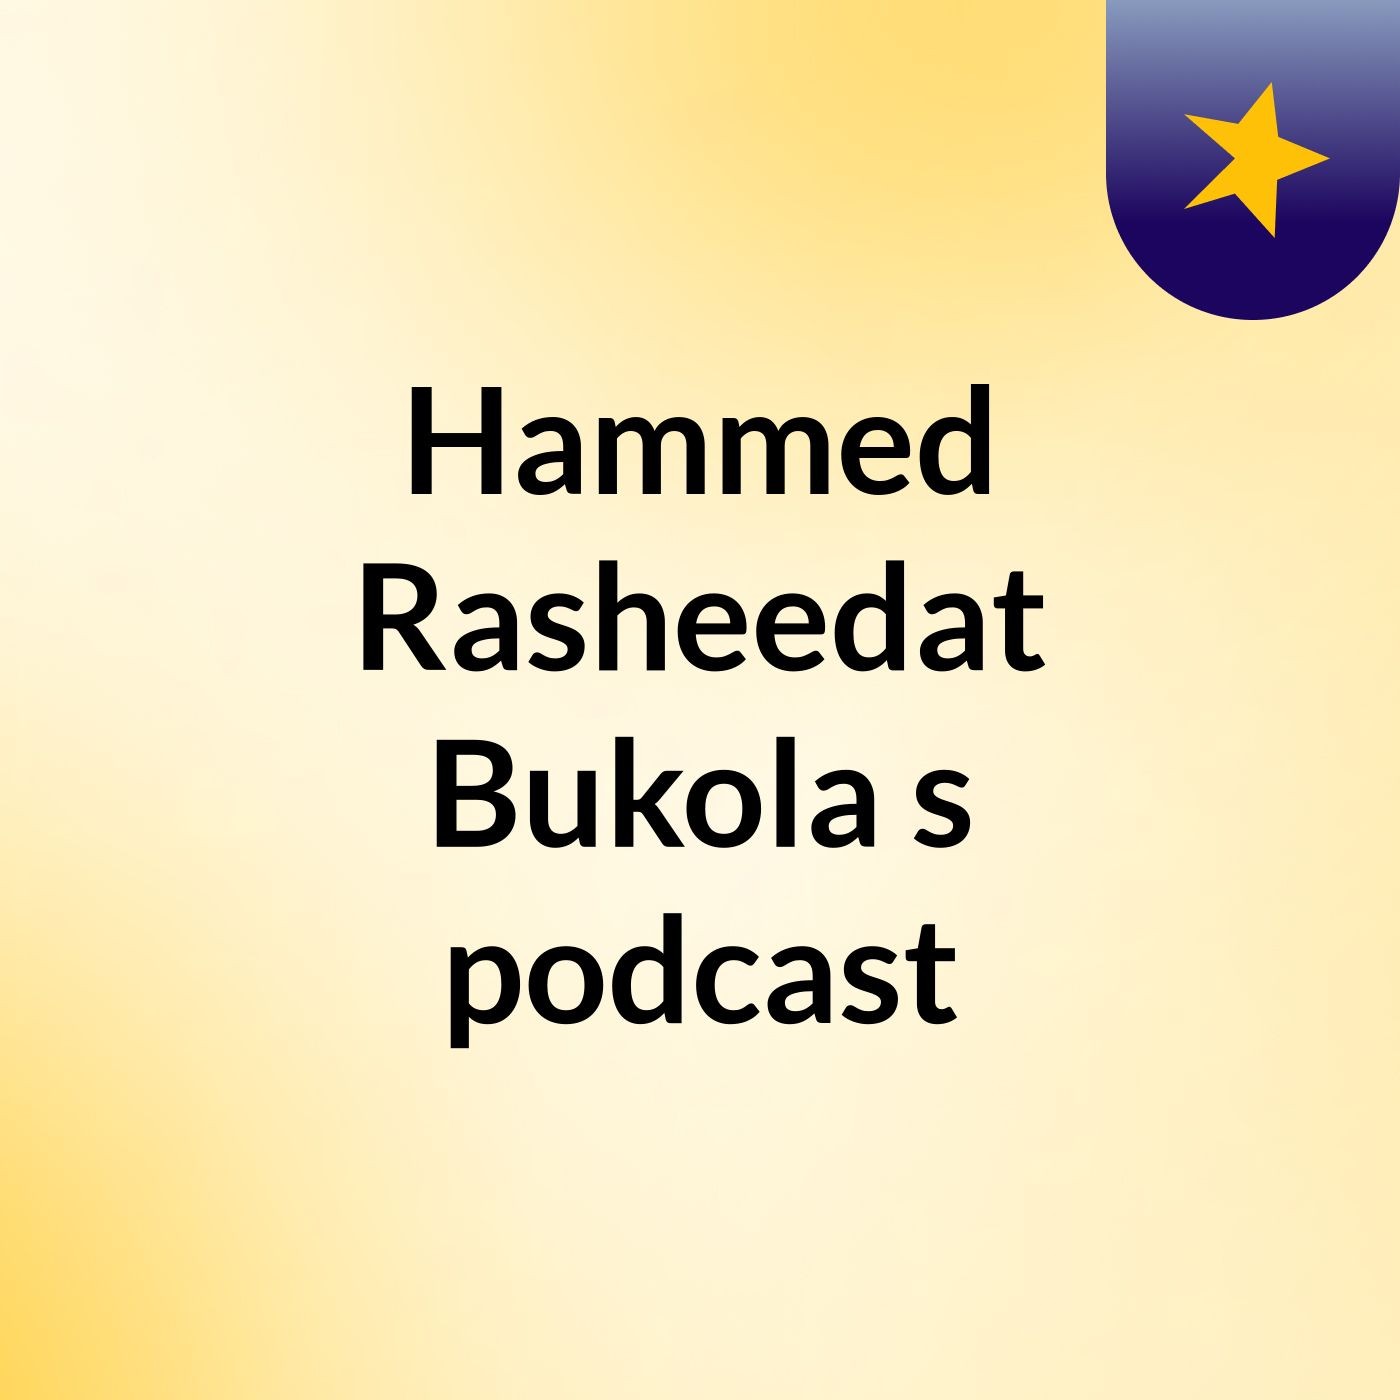 Hammed Rasheedat Bukola's podcast